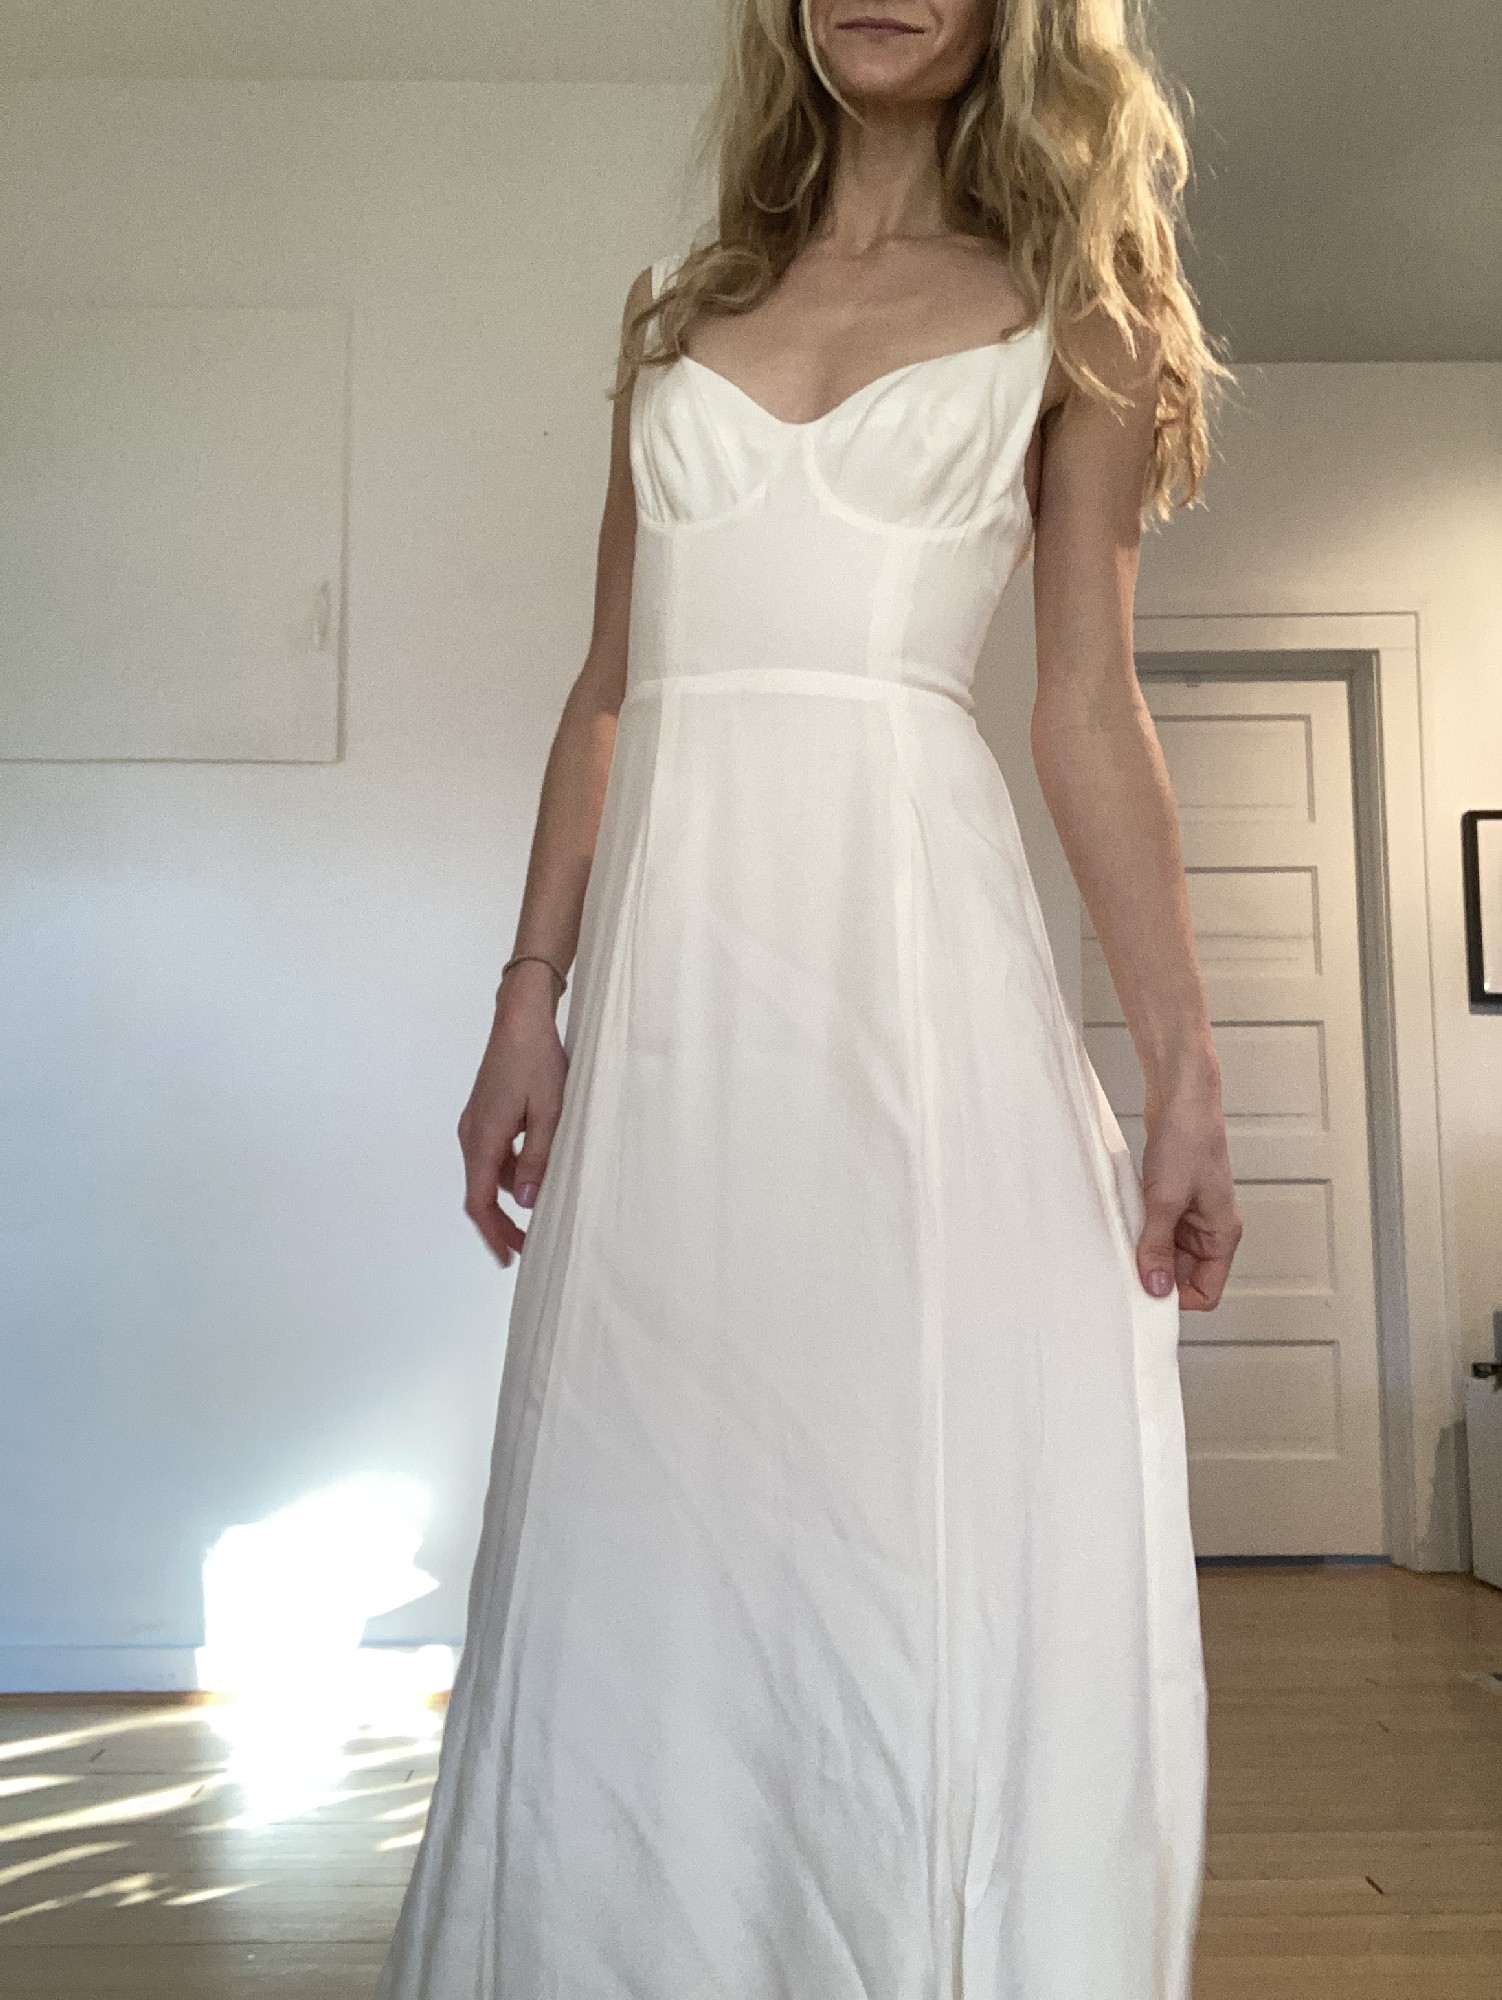 The Reformation New Wedding Dress Save 23% - Stillwhite